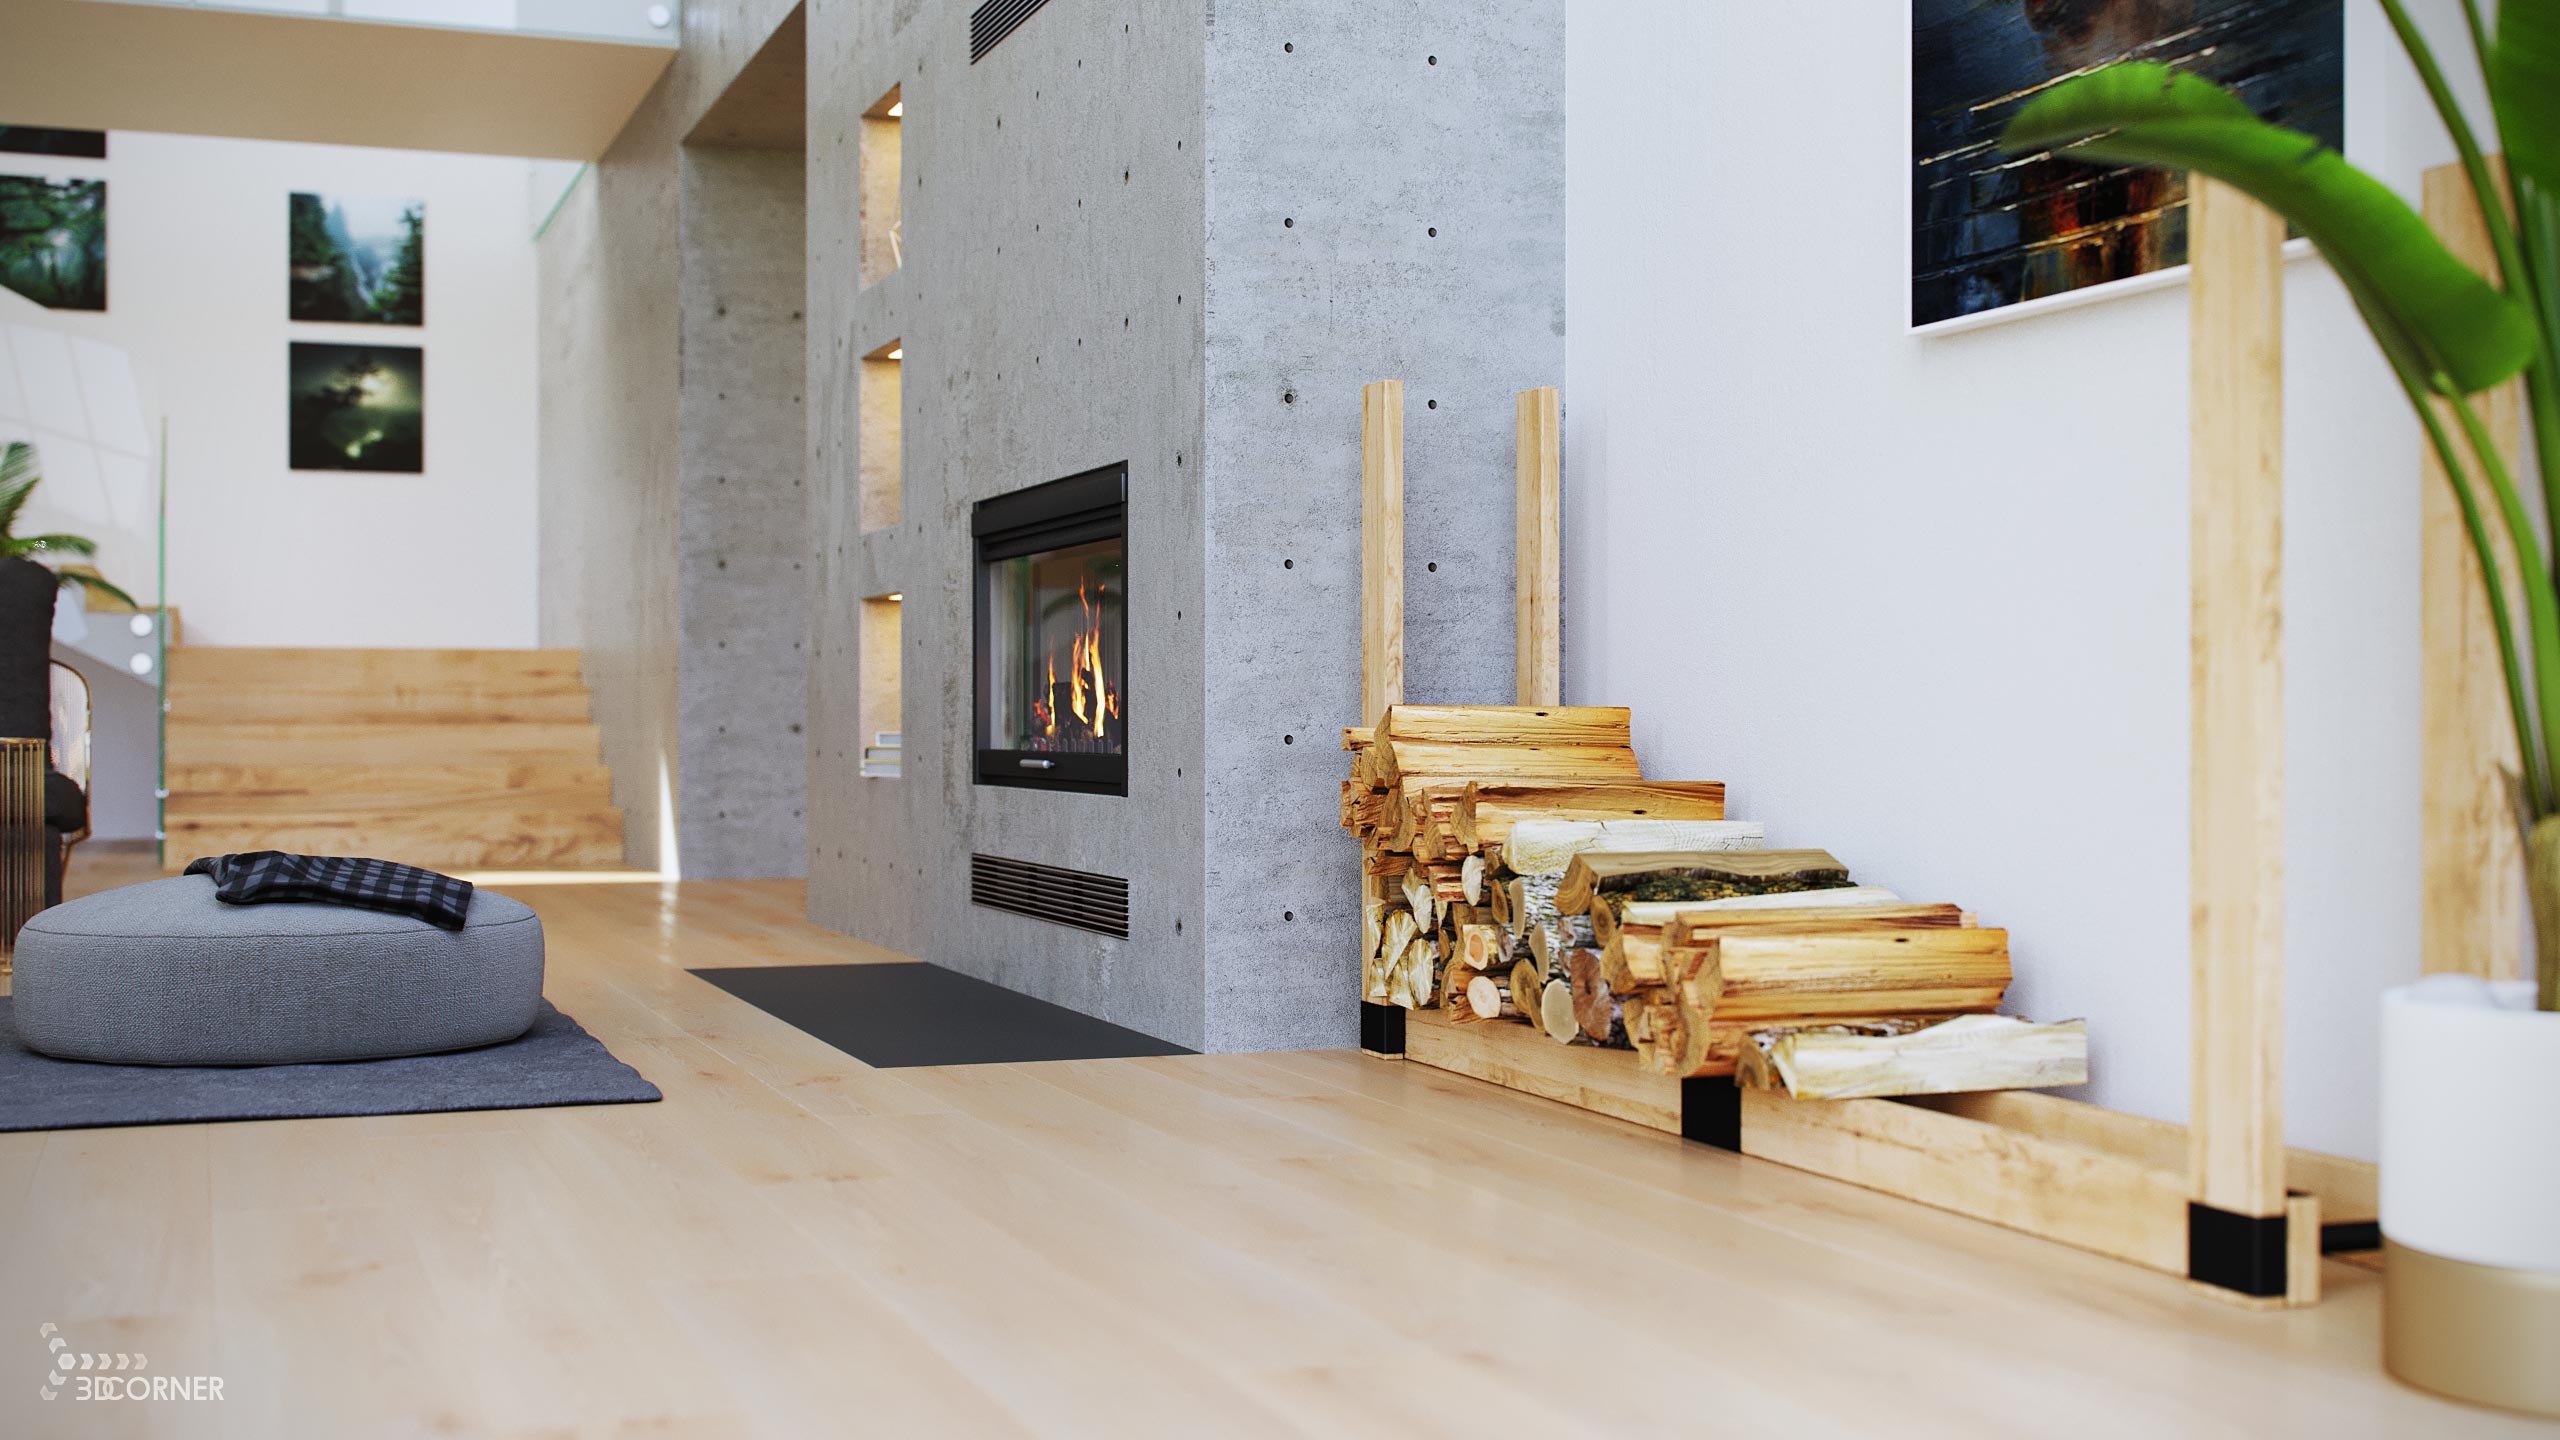 visualization interior photorealistic fireplace product apartment salon 3dcorner